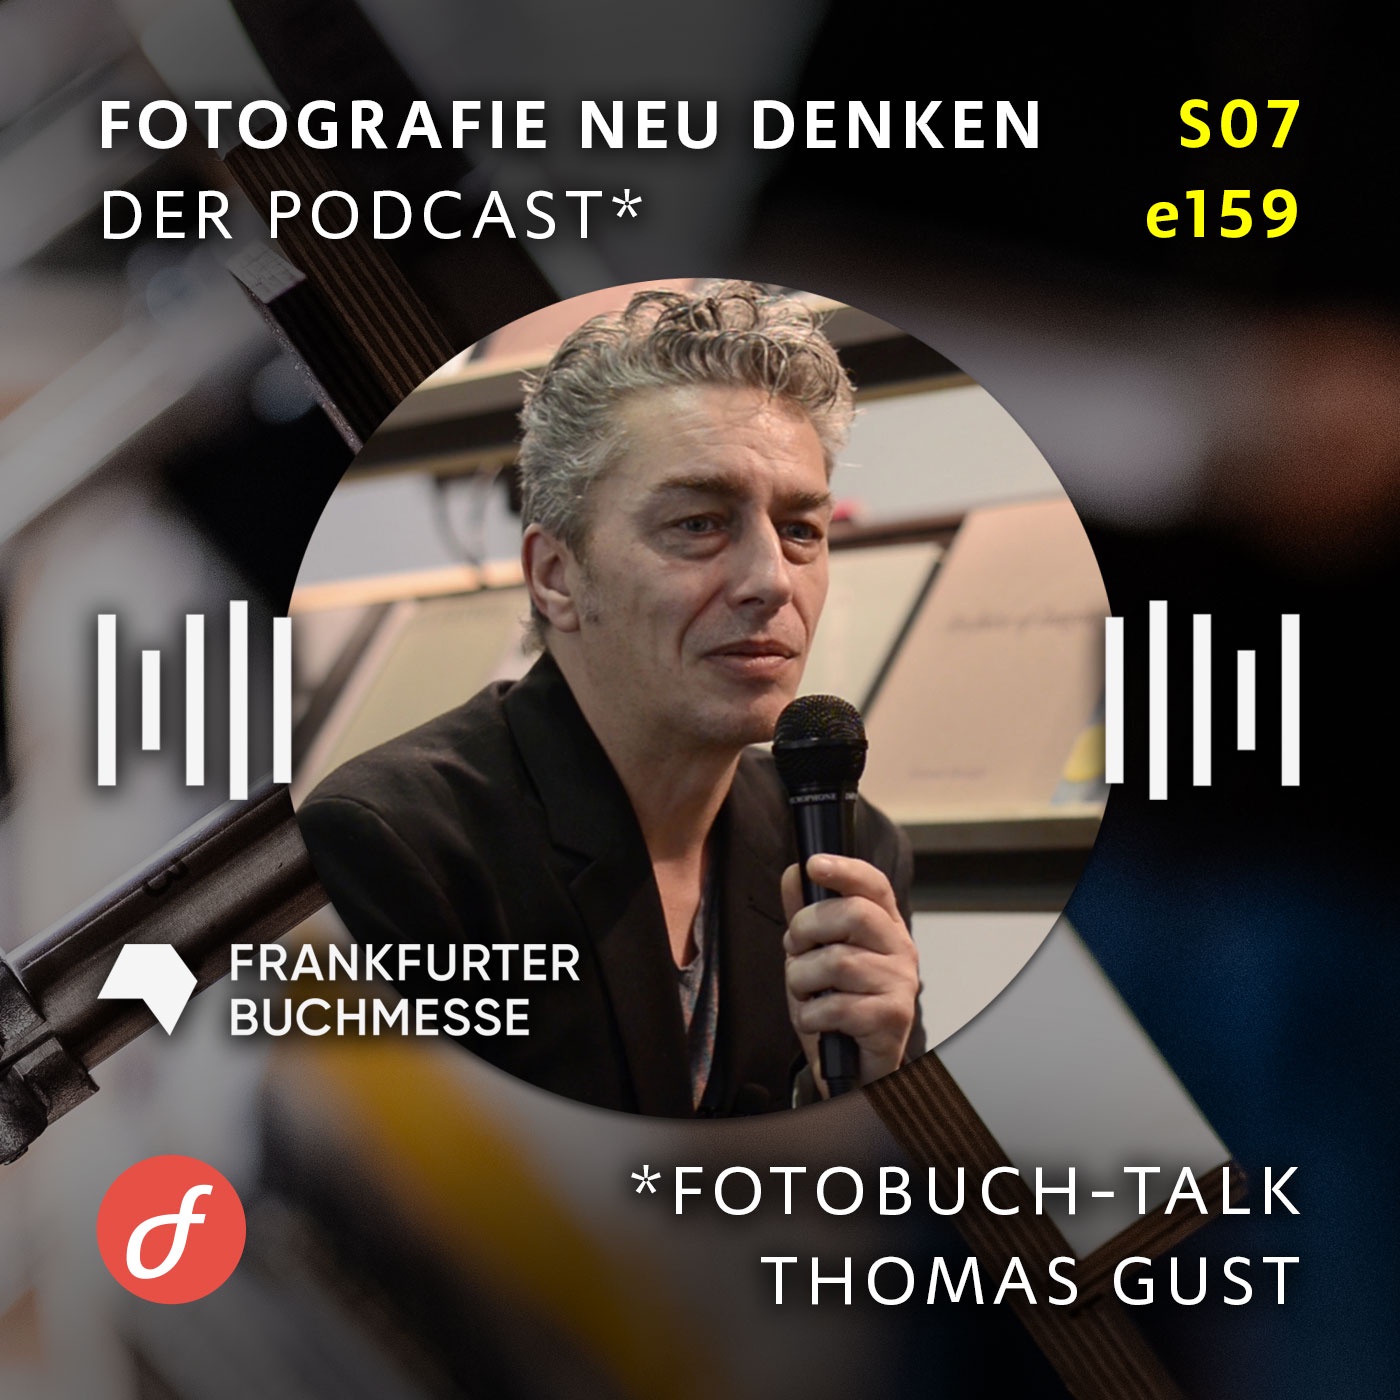 e159 Fotobuch-Talk mit Thomas Gust. Frankfurter Buchmesse.